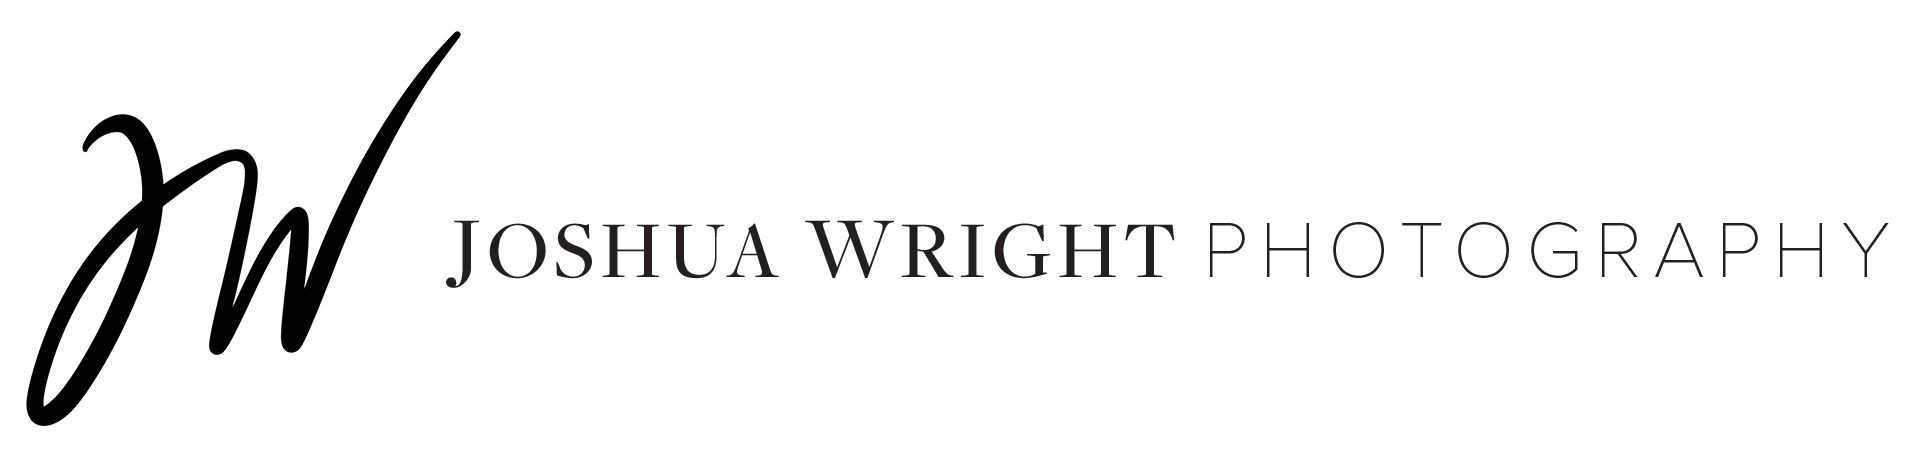 JoshuaWright_Signature_Desktop